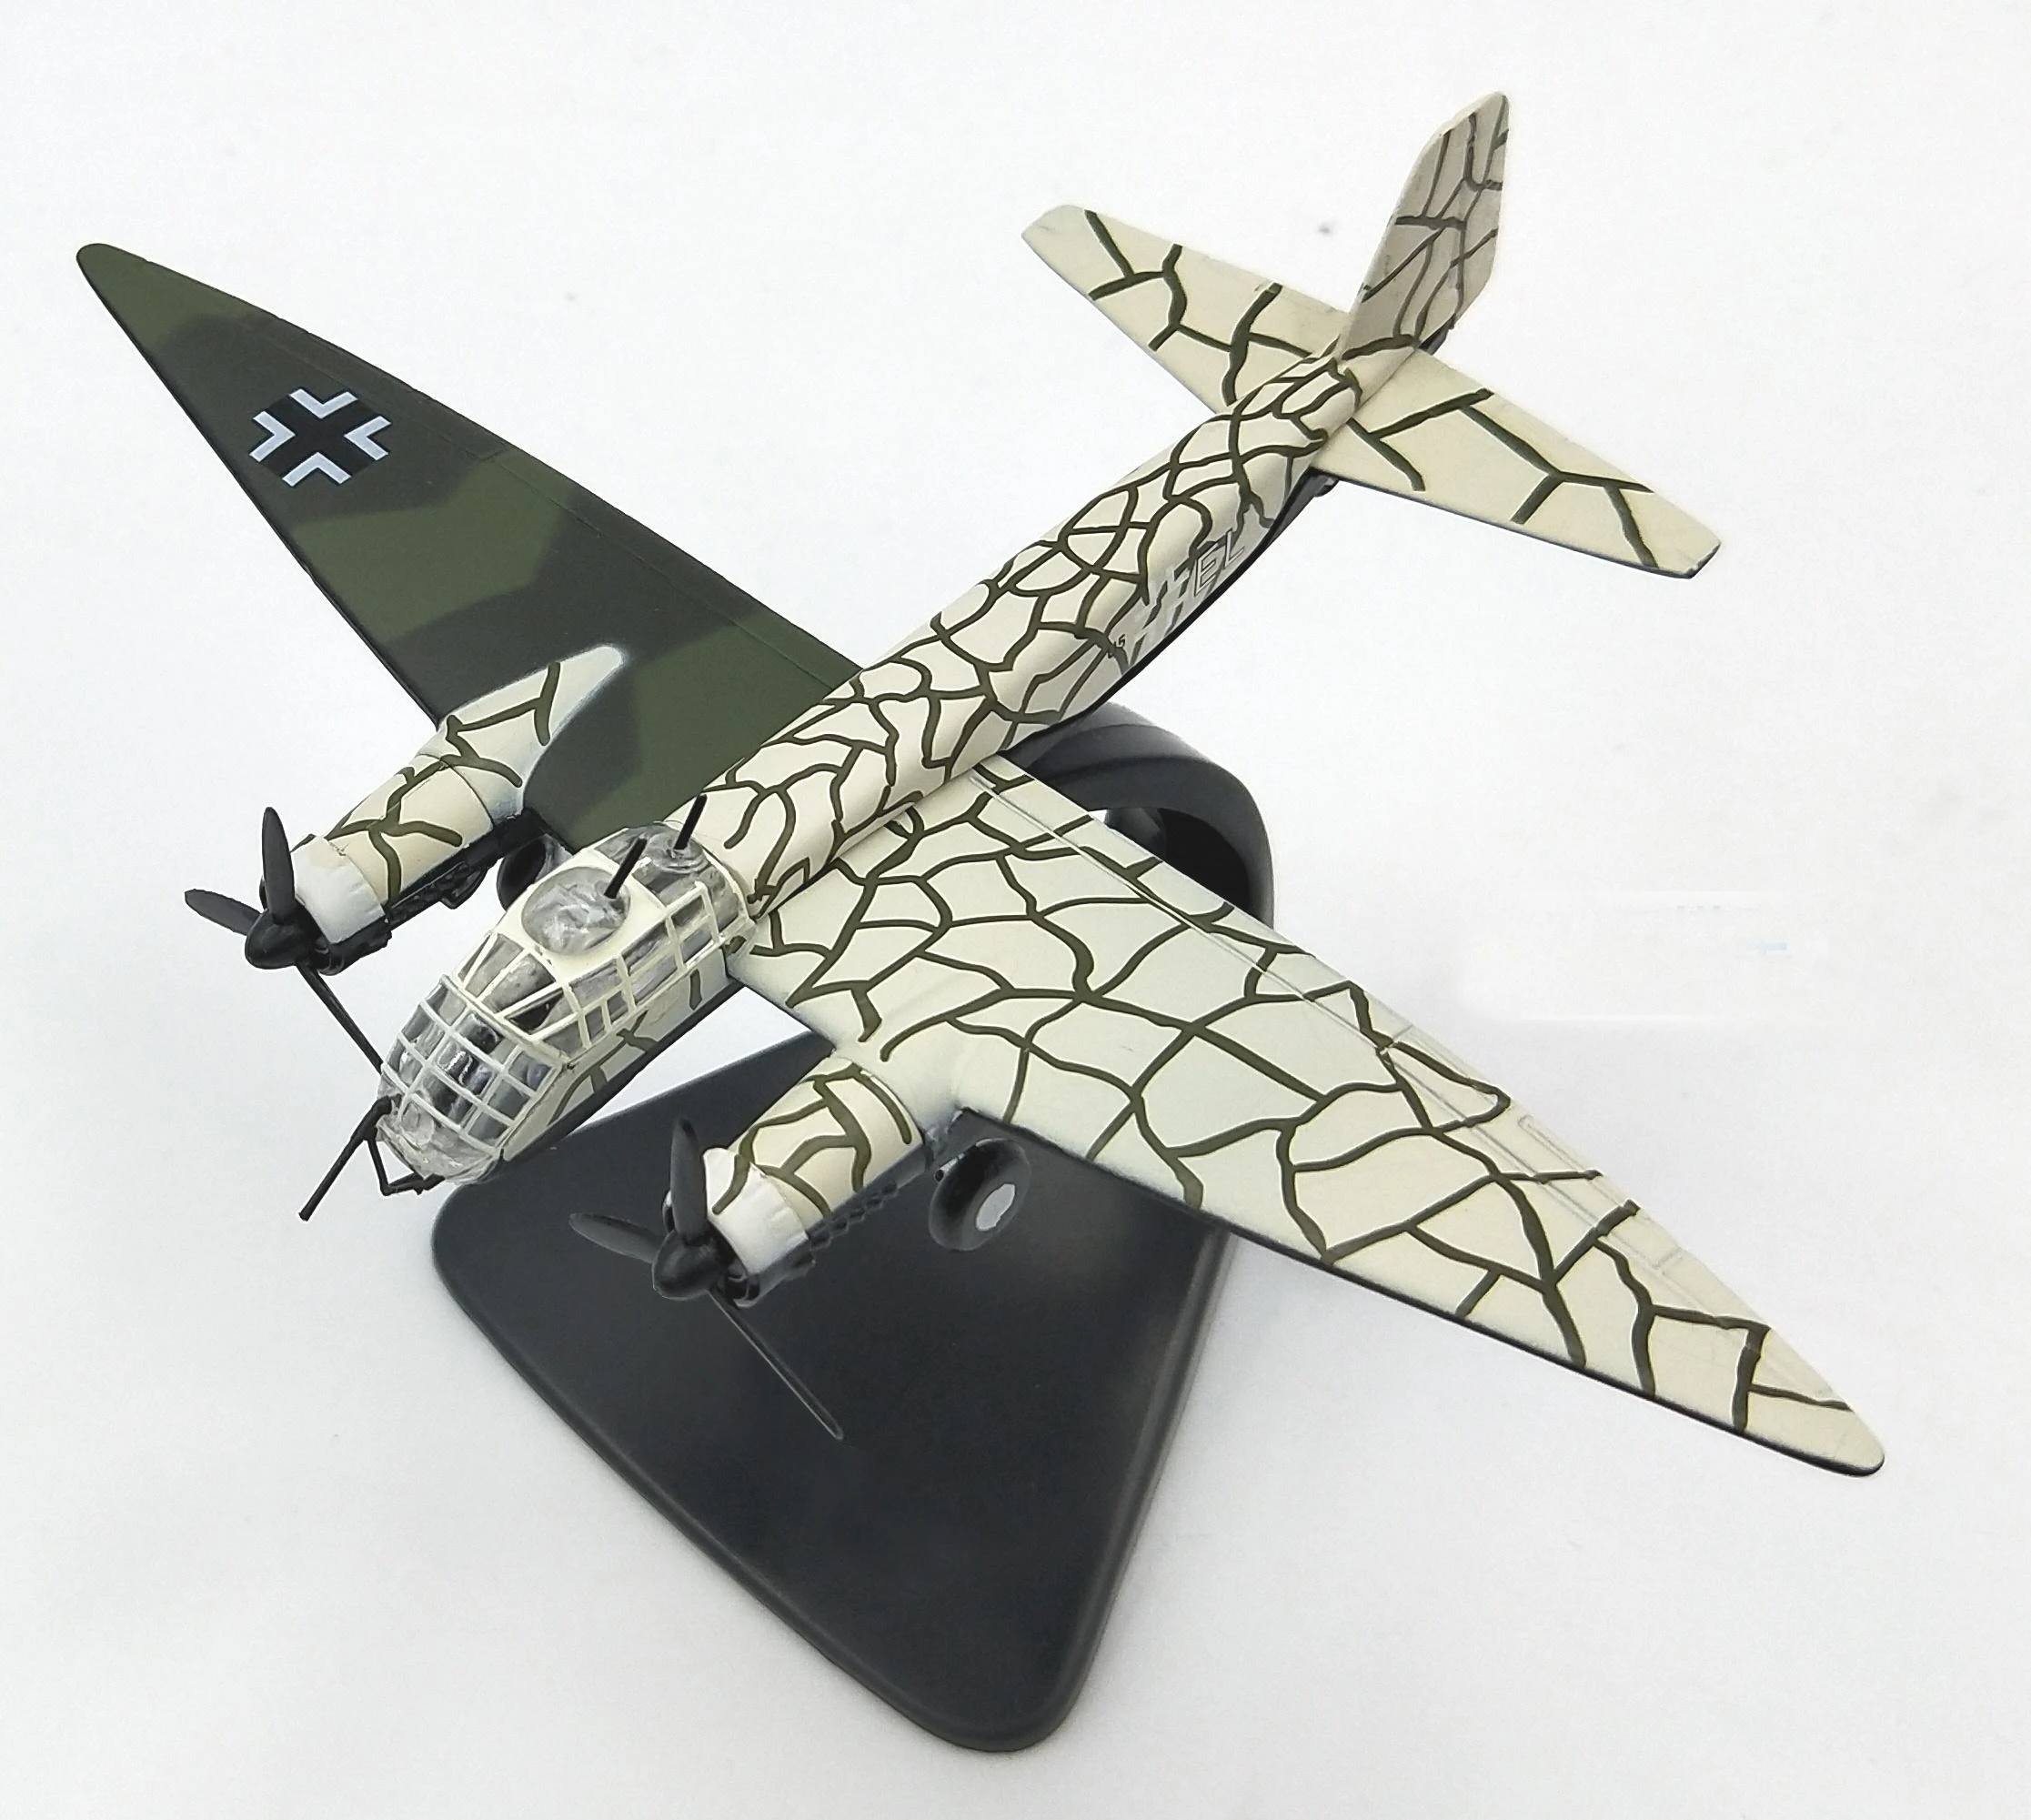 

rare Special Offer 1:144 German JU-188 Medium Bomber Al06 Alloy Collection Model